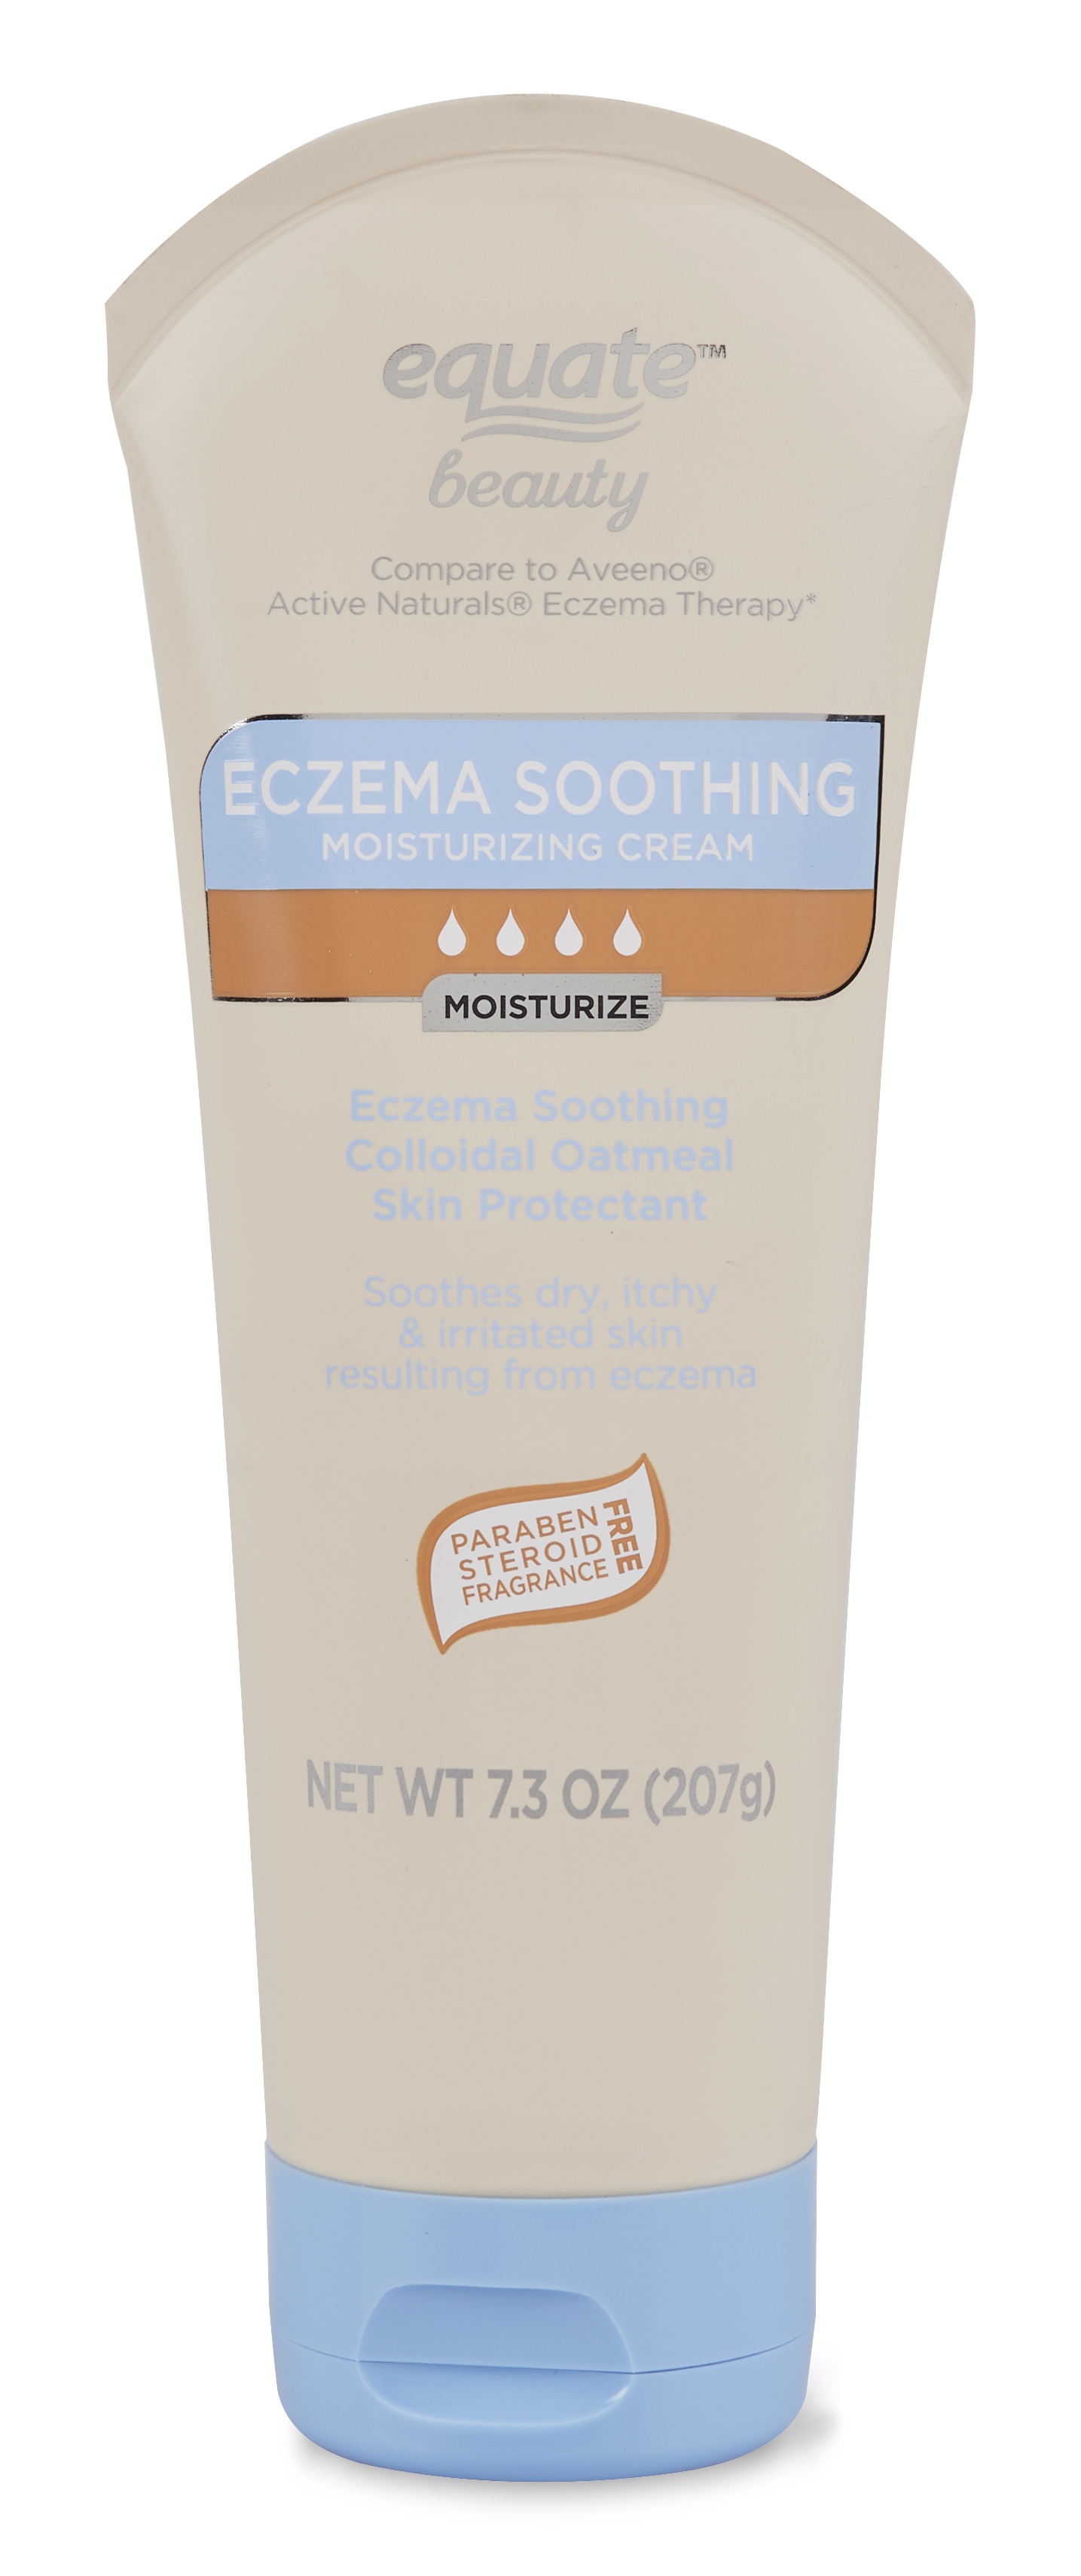 Equate Beauty Eczema Soothing Moisturizing Cream